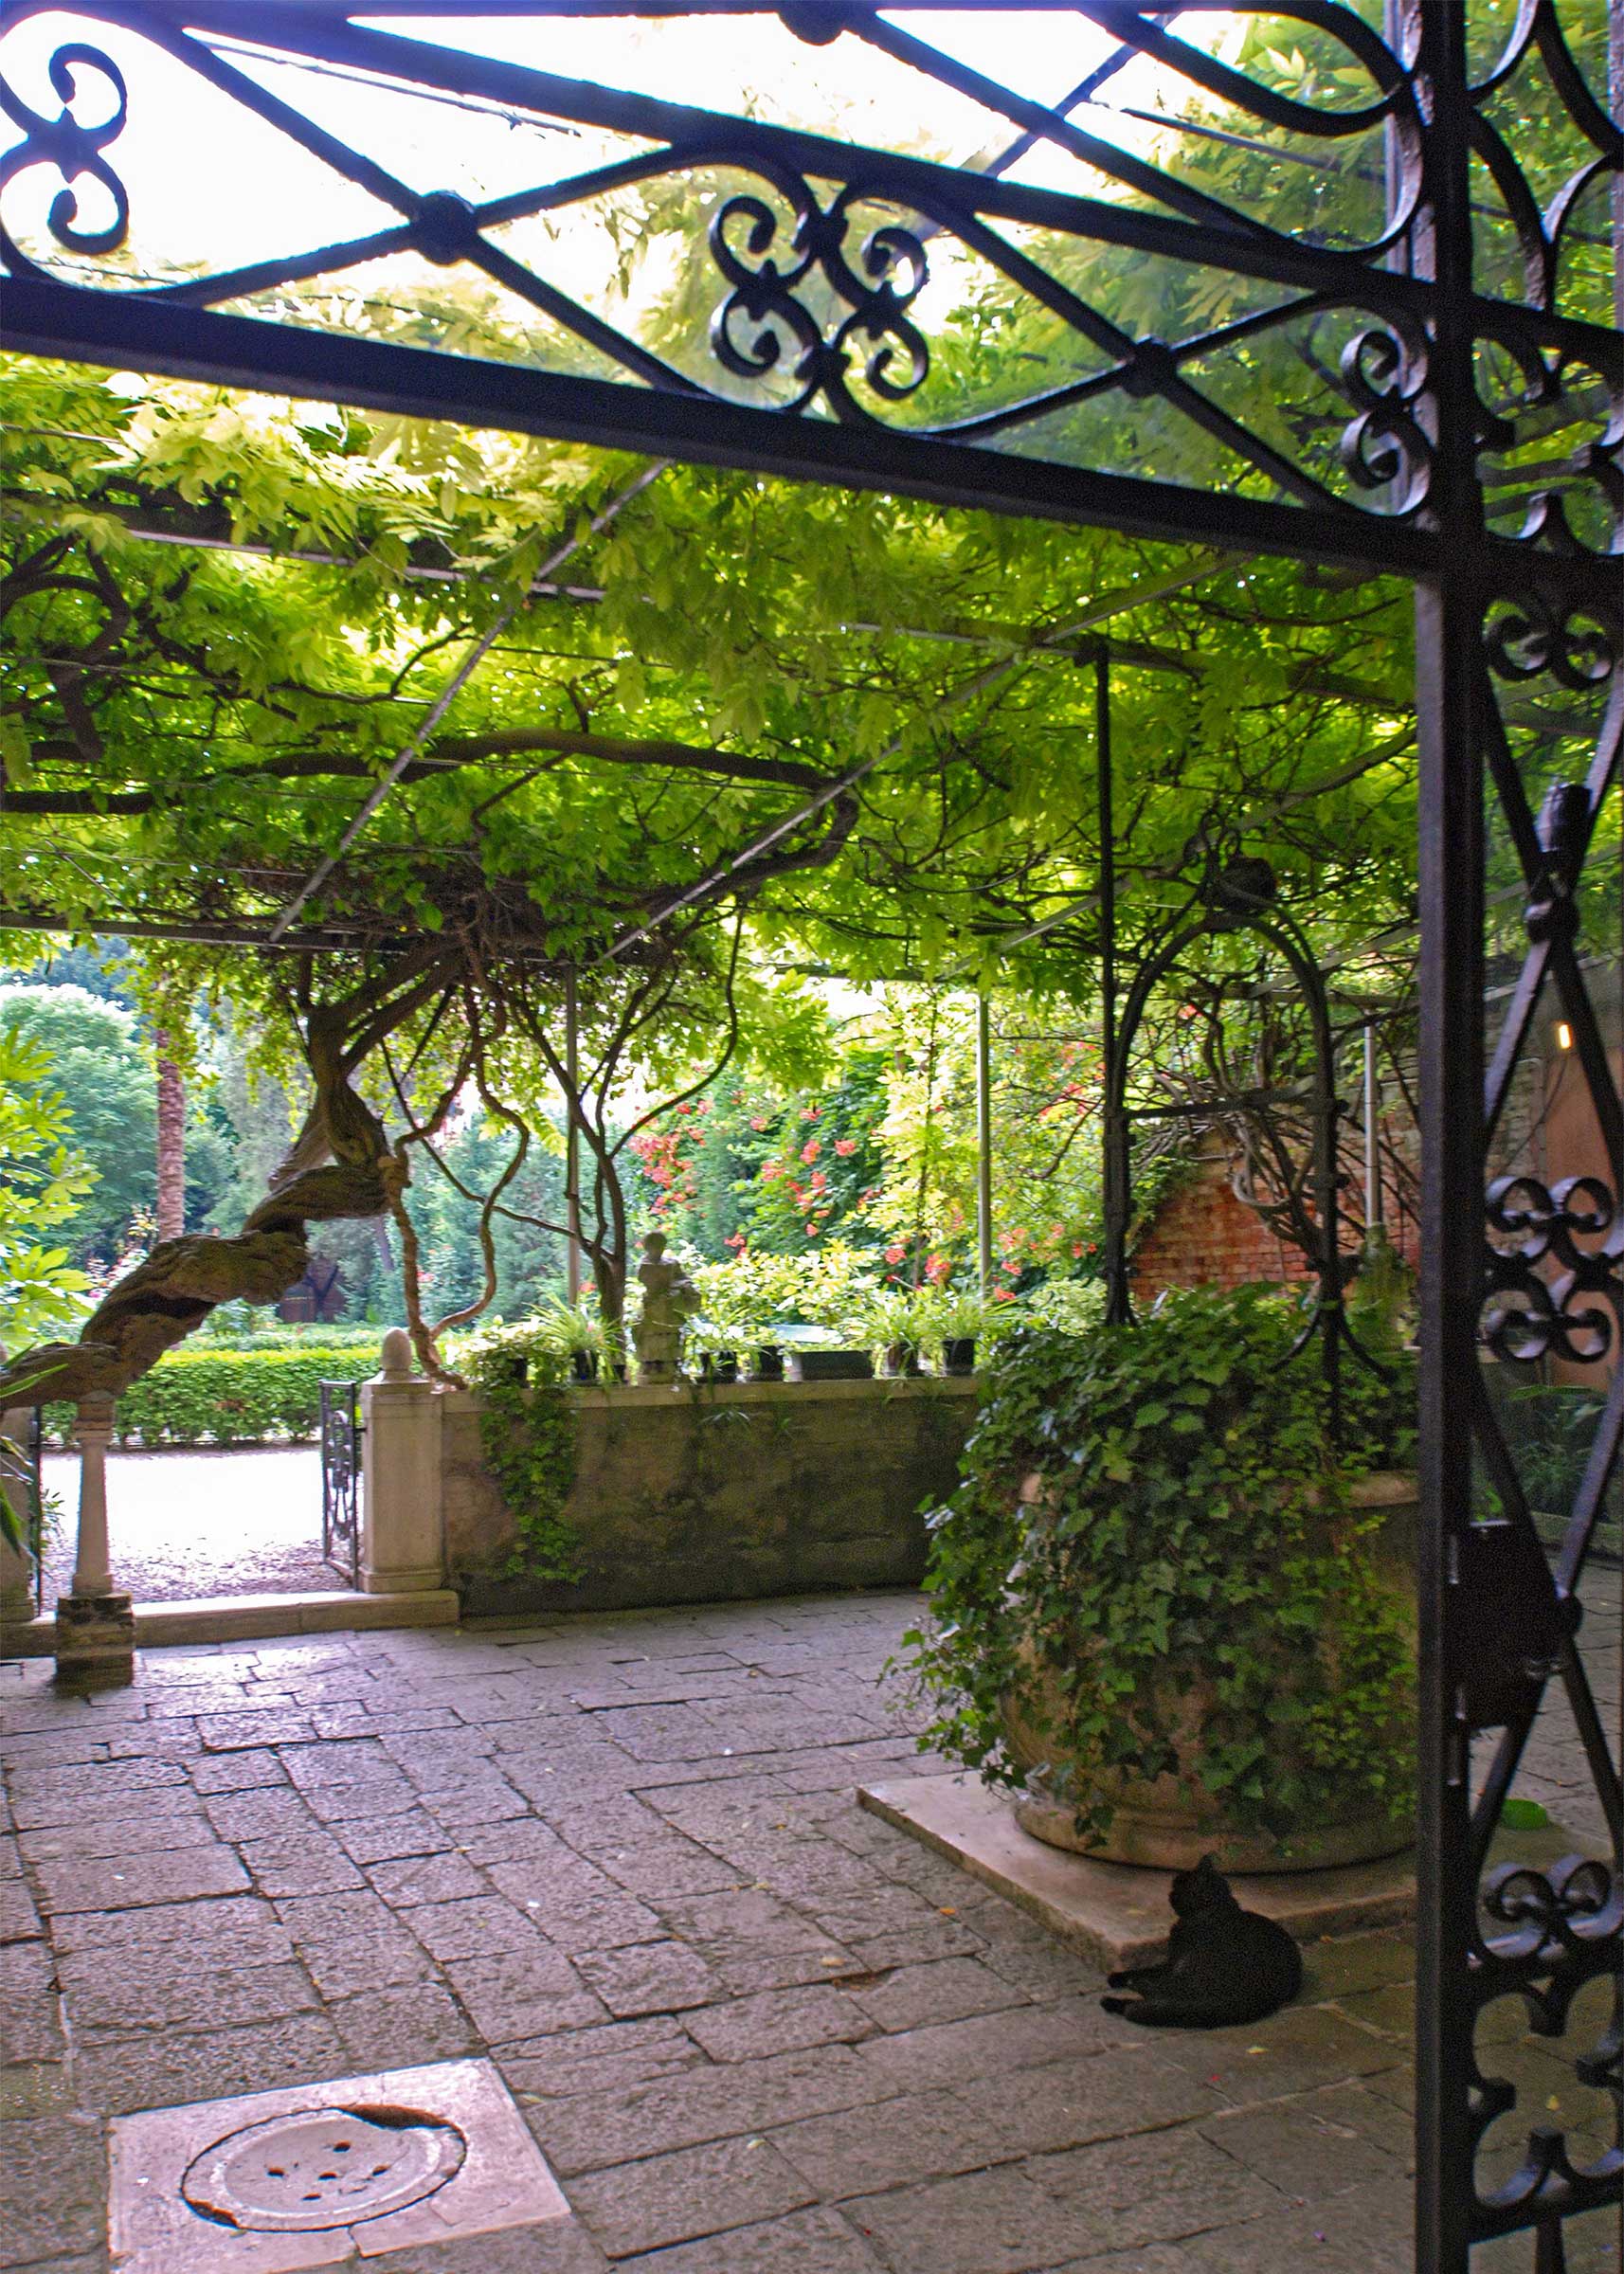 Rezzonico Palace - shared garden